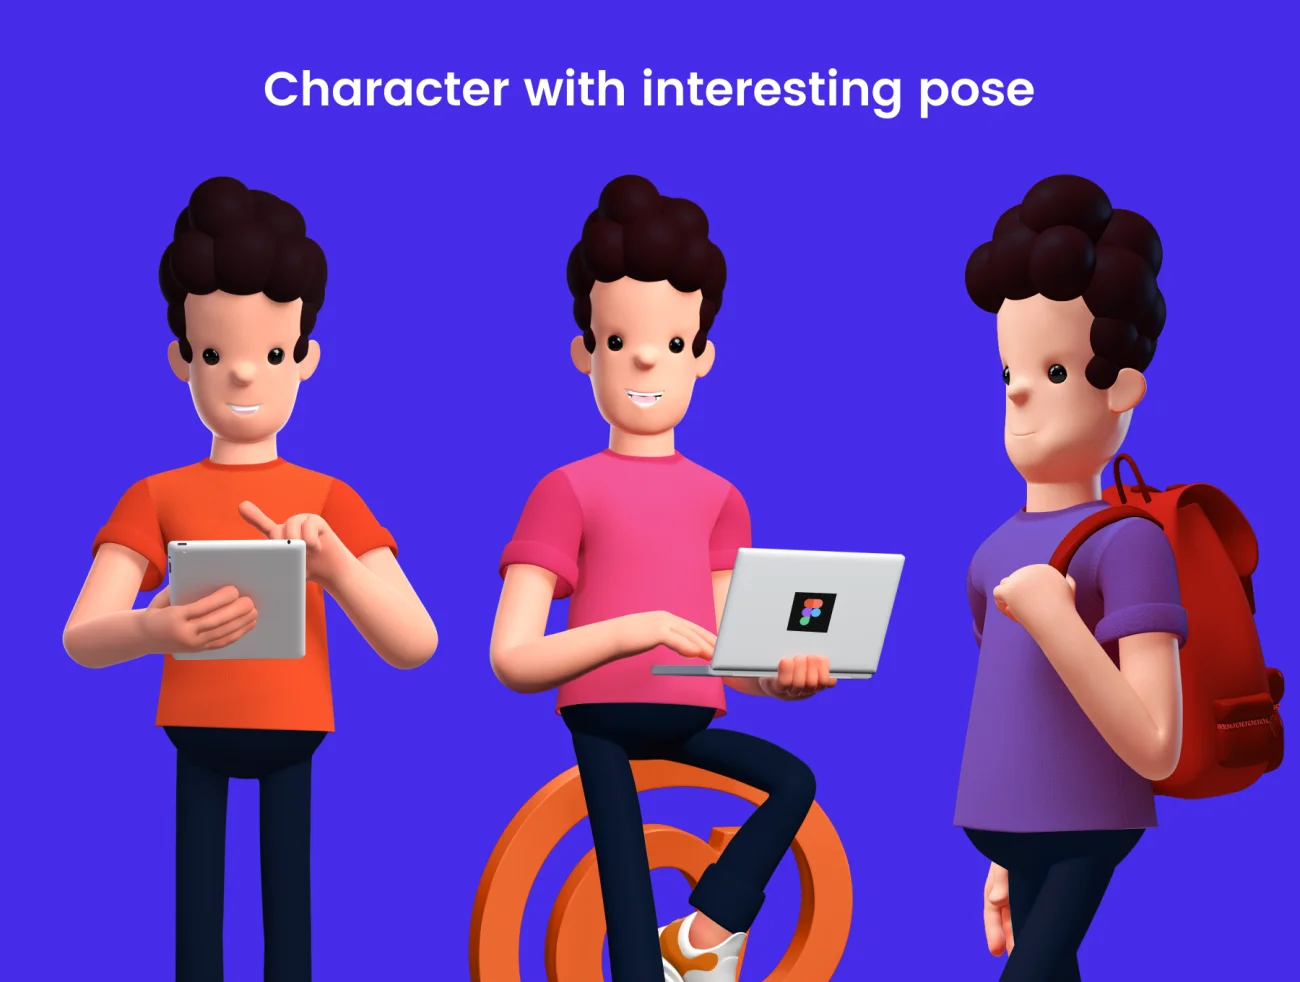 3D character with 10 poses 10个不同姿势的趣味3D人物角色插图套件-3D/图标、人物插画、场景插画、学习生活、插画、社交购物、职场办公、金融理财-到位啦UI